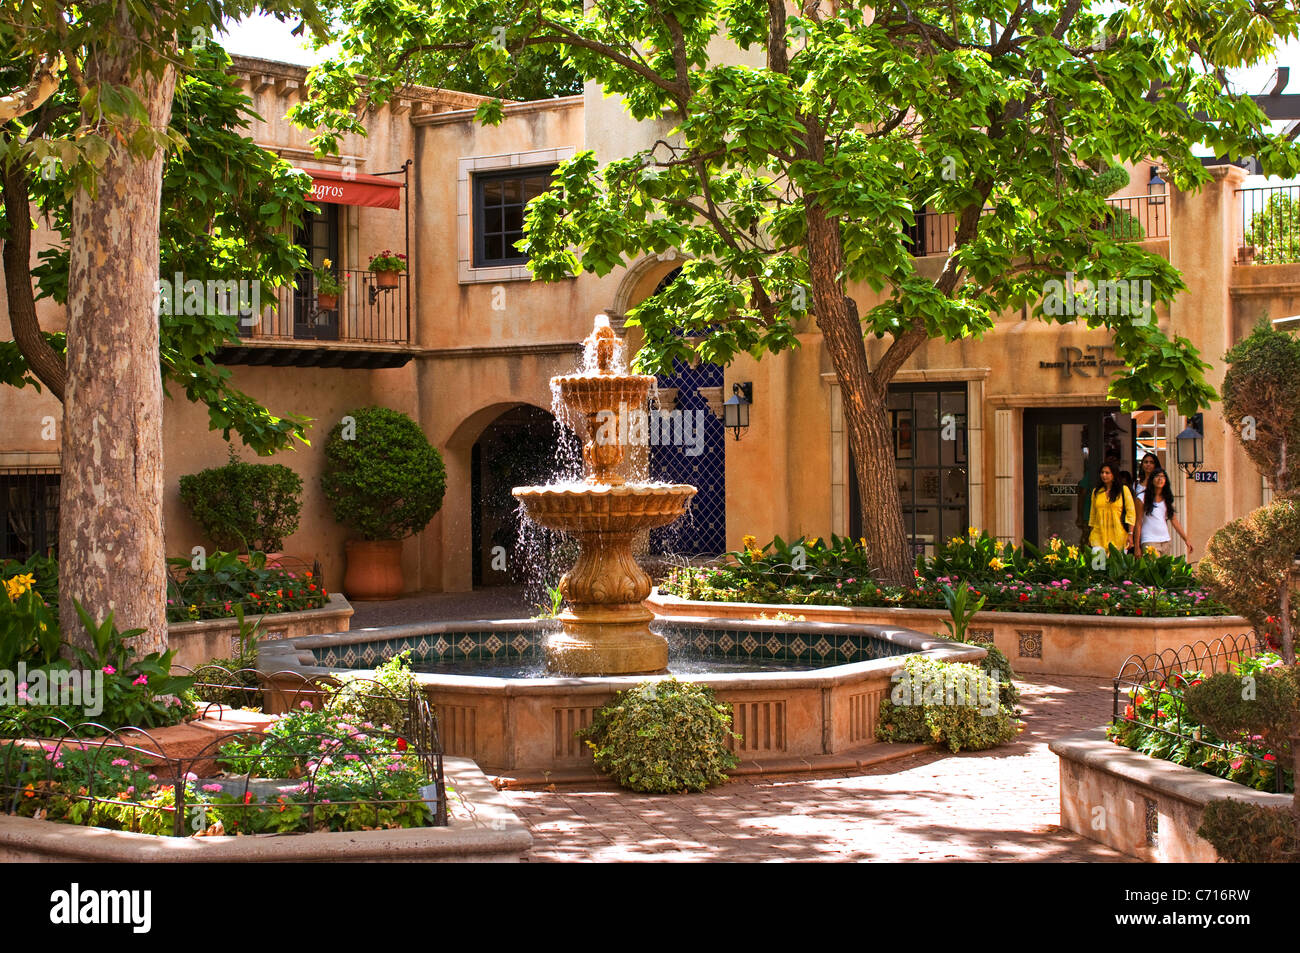 spanish style tiered fountain patio courtyard C716RW